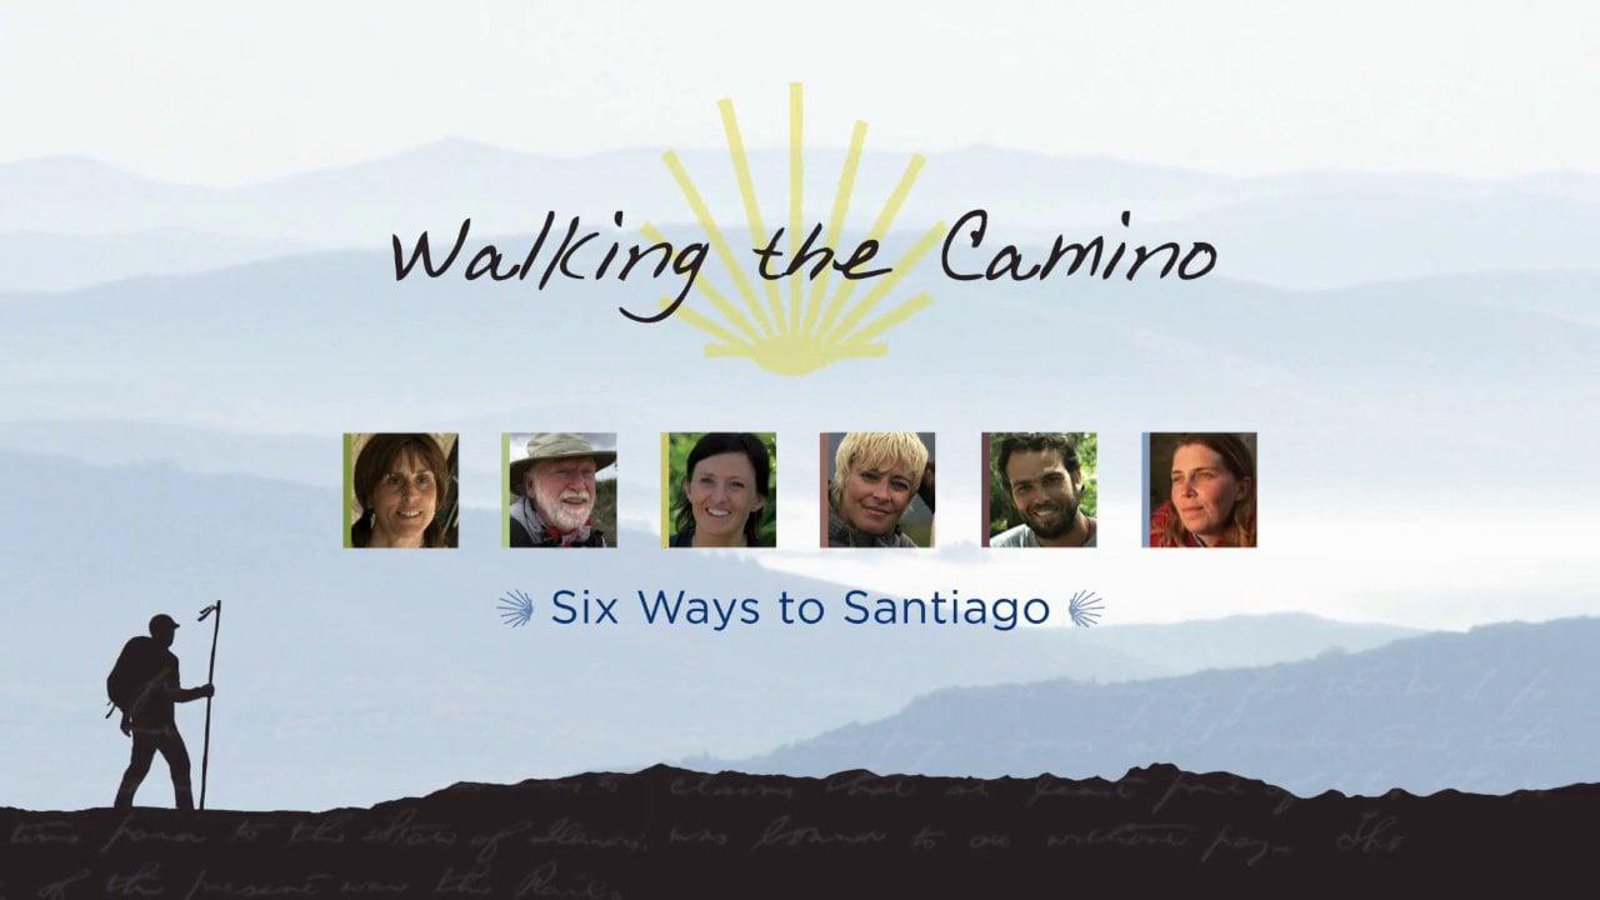 Walking the Camino: Six Ways to Santiago - Following Six People on a Spiritual Pilgrimage